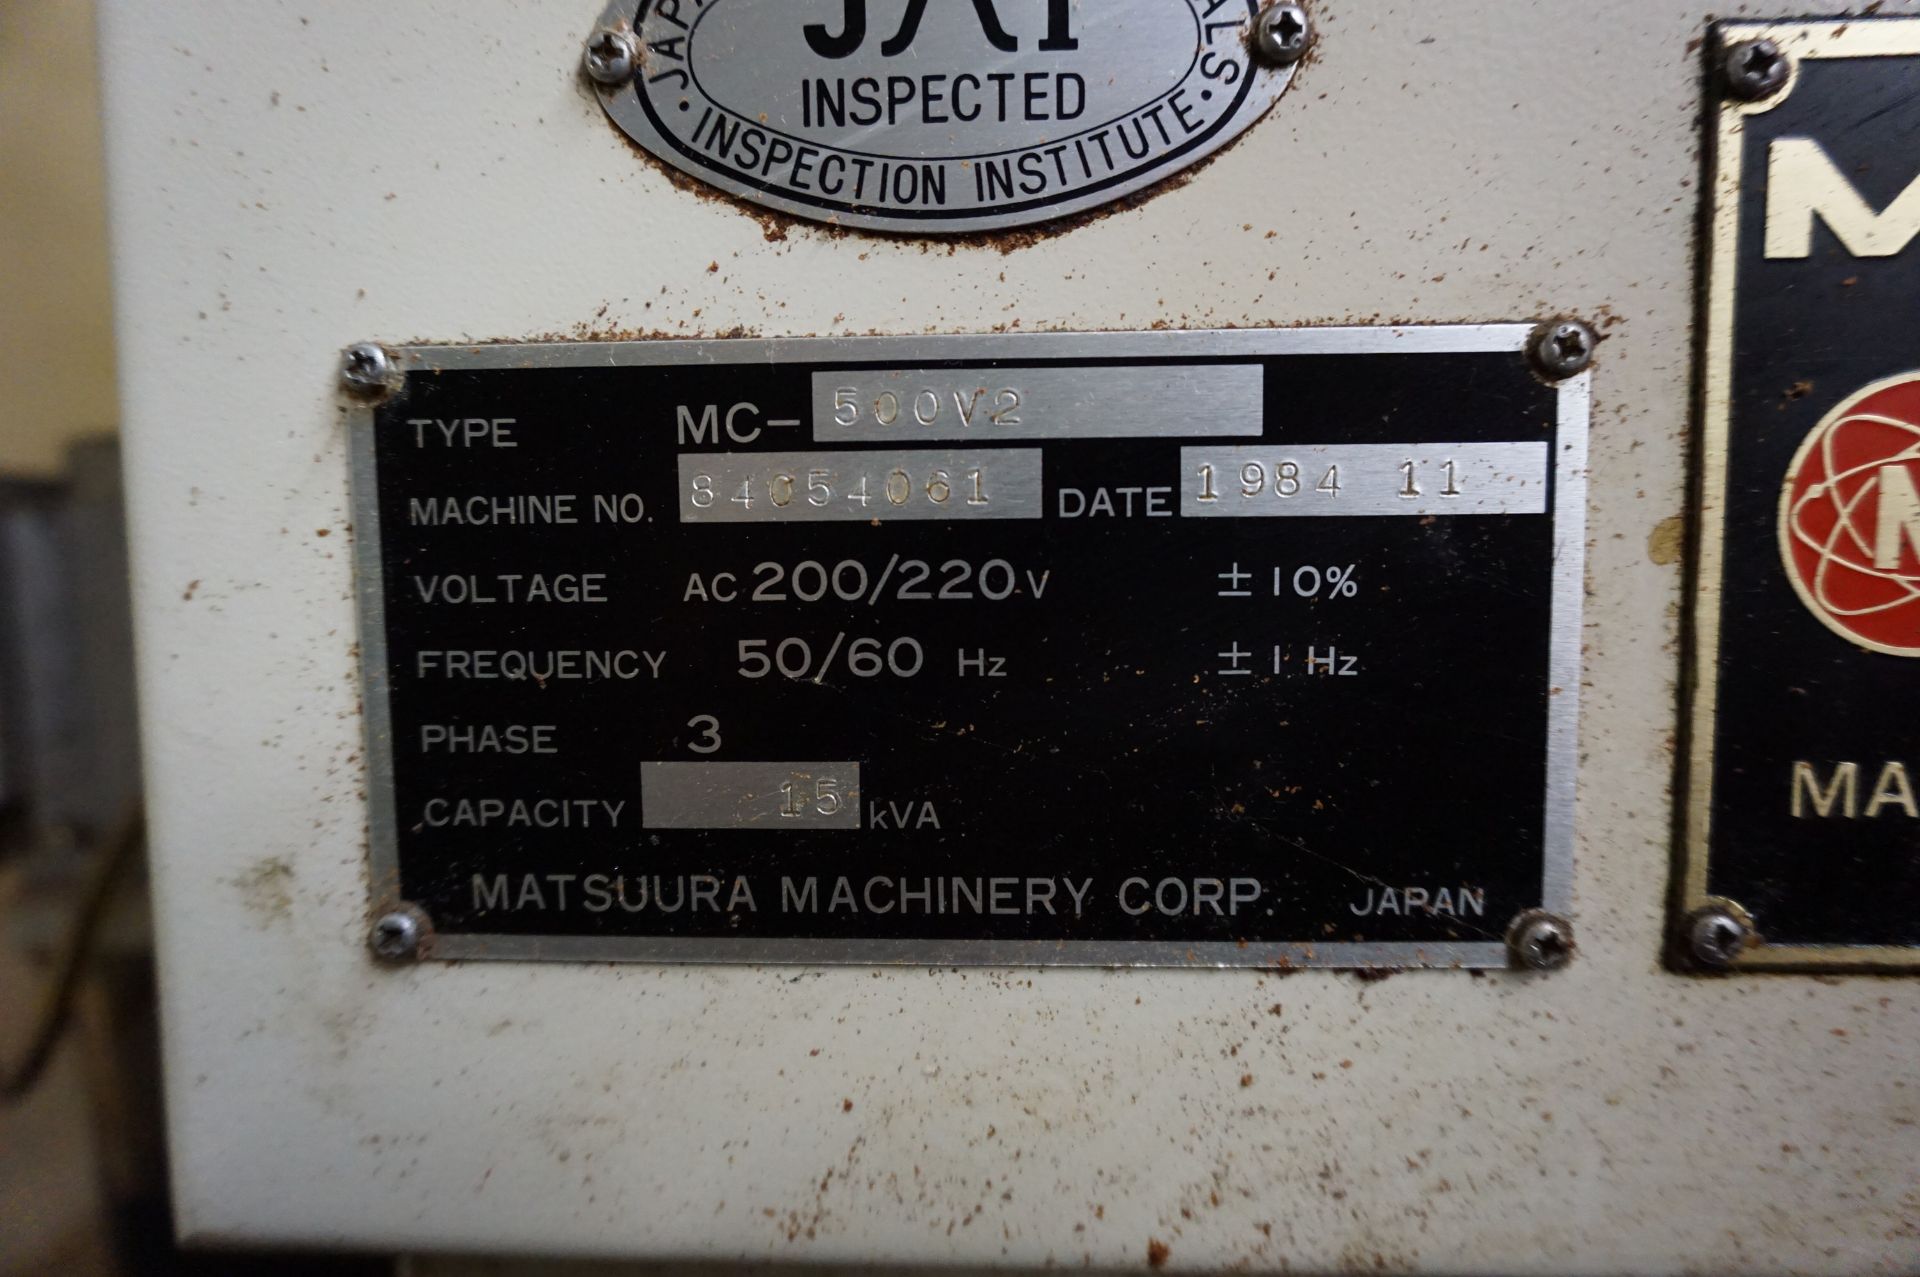 1984 MATSUURA MC-500V2 CNC VERTICAL MILLING MACHINE, S/N 84054061, MATSUURA CONTROL MODEL EN4- - Image 7 of 8